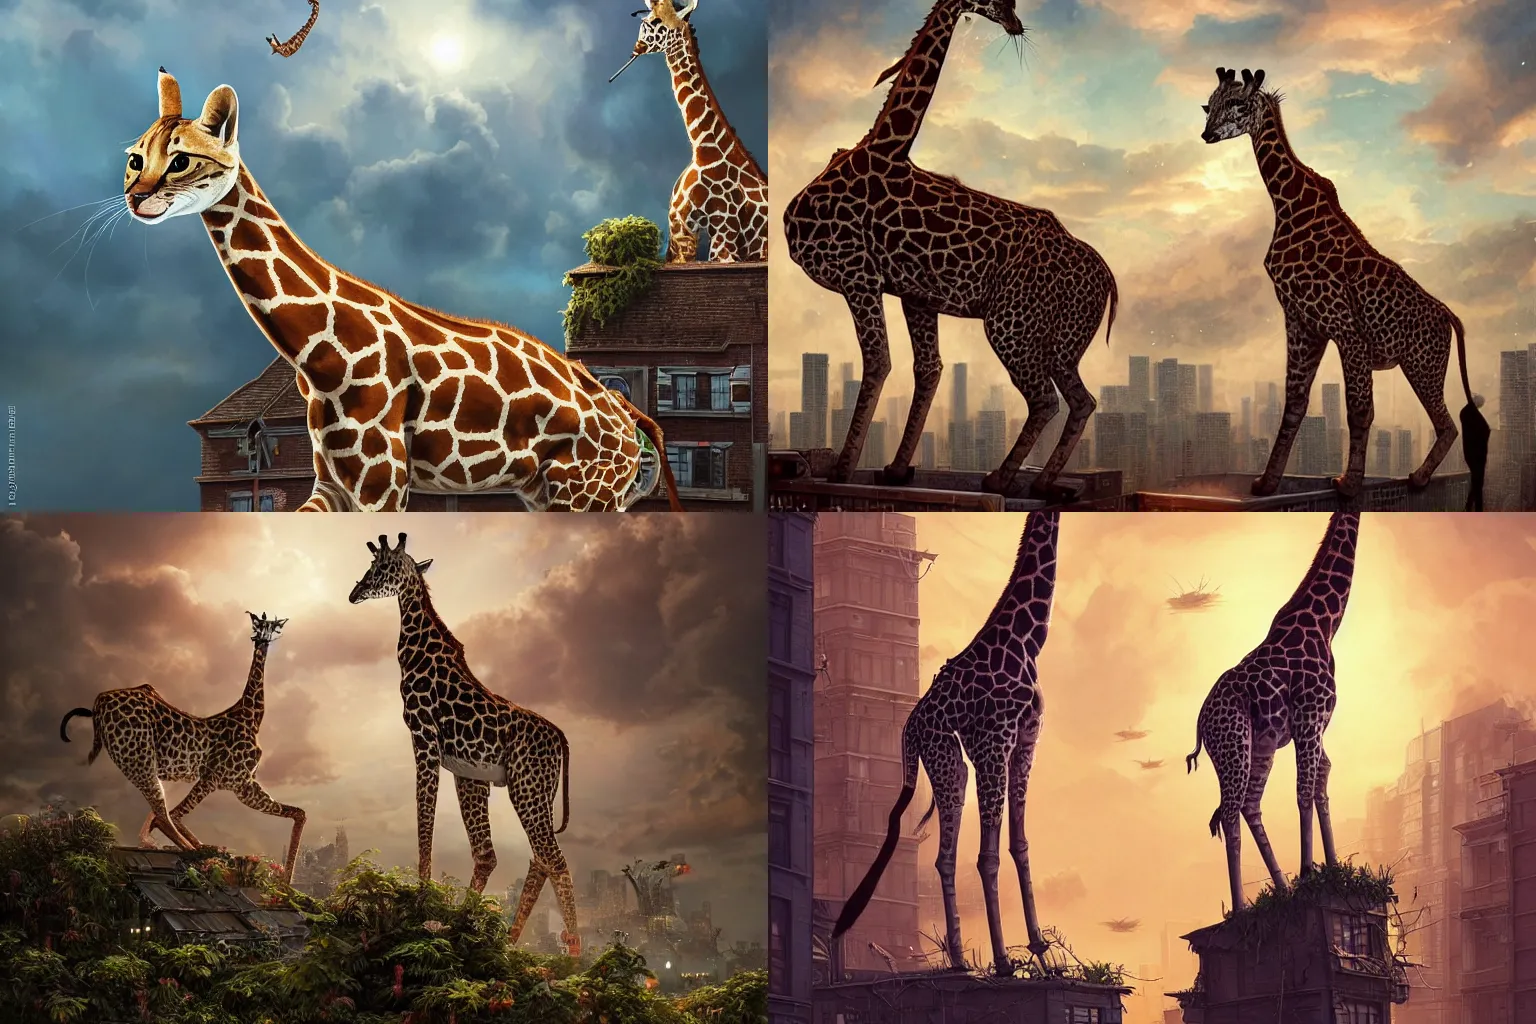 Prompt: a cat as giraffe standing on the rooftop, big giraffe, fantasy, illustration, intricate, epic lighting, cinematic composition, hyper realistic, 8 k resolution, by artgerm, tooth wu, dan mumford, beeple, wlop, rossdraws, james jean, andrei riabovitchev, marc simonetti, yoshitaka amano, artstation